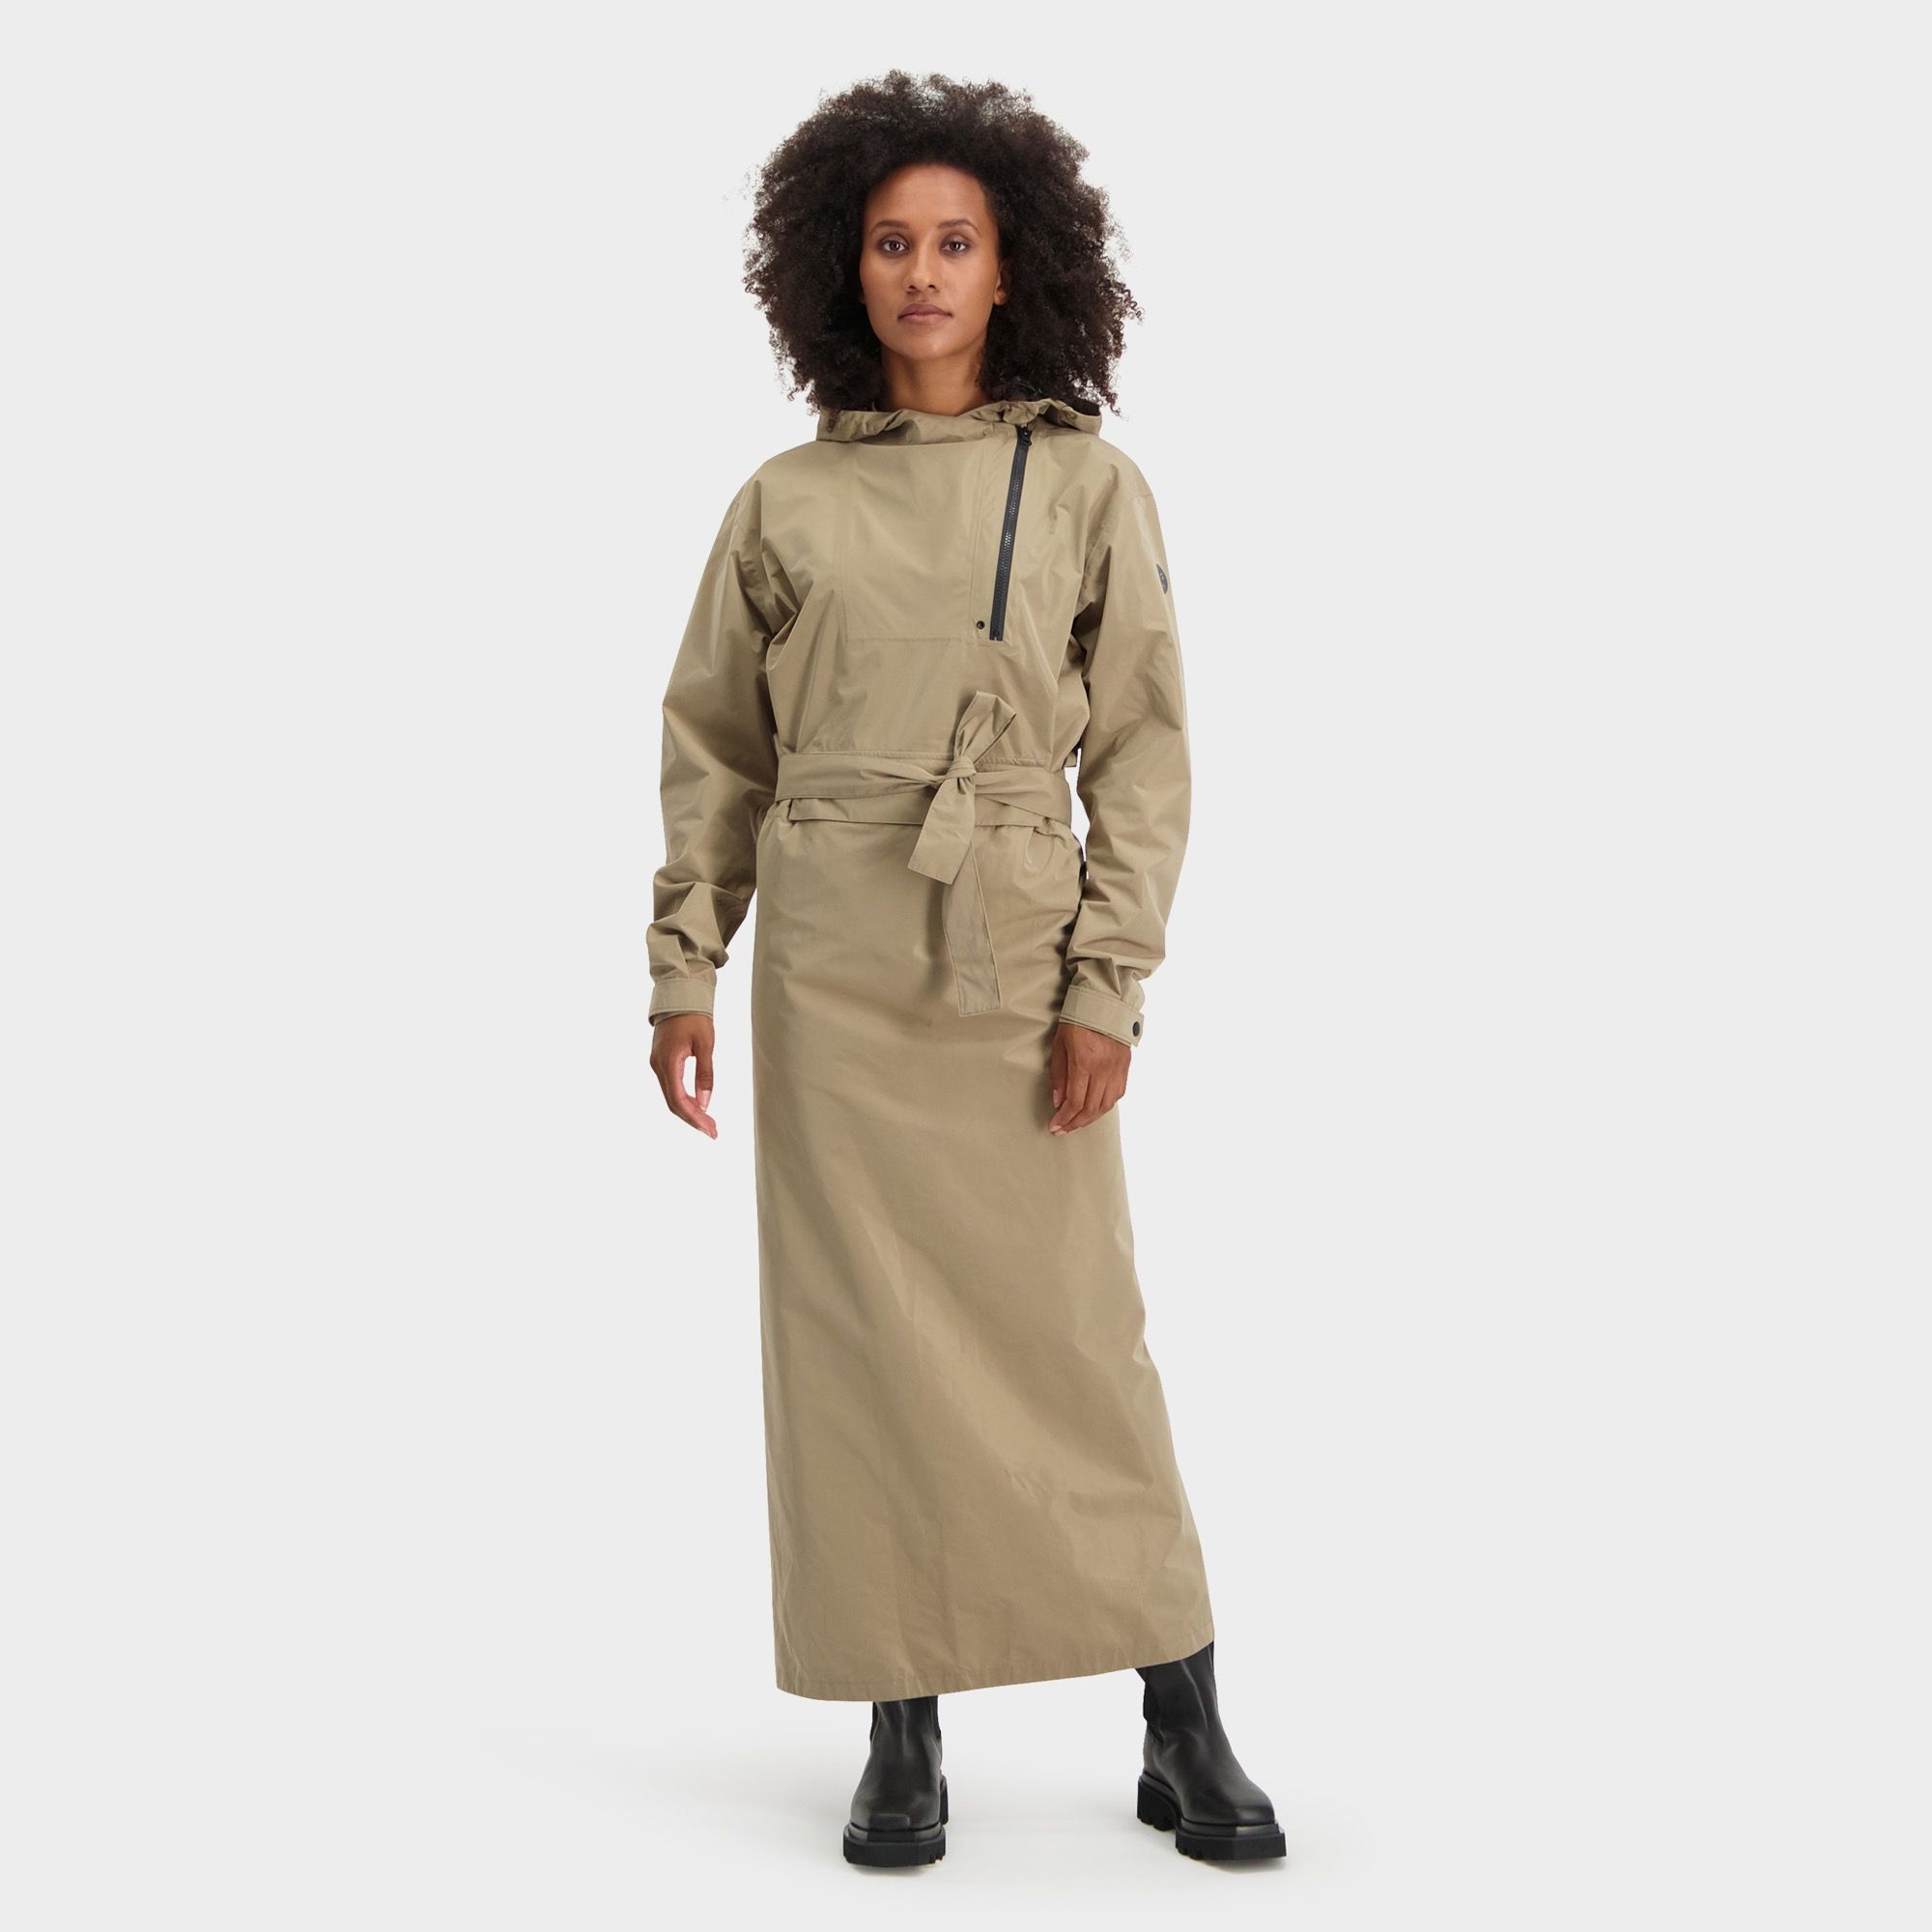 Rain Dress Anorak Urban Outdoor Femme fit example